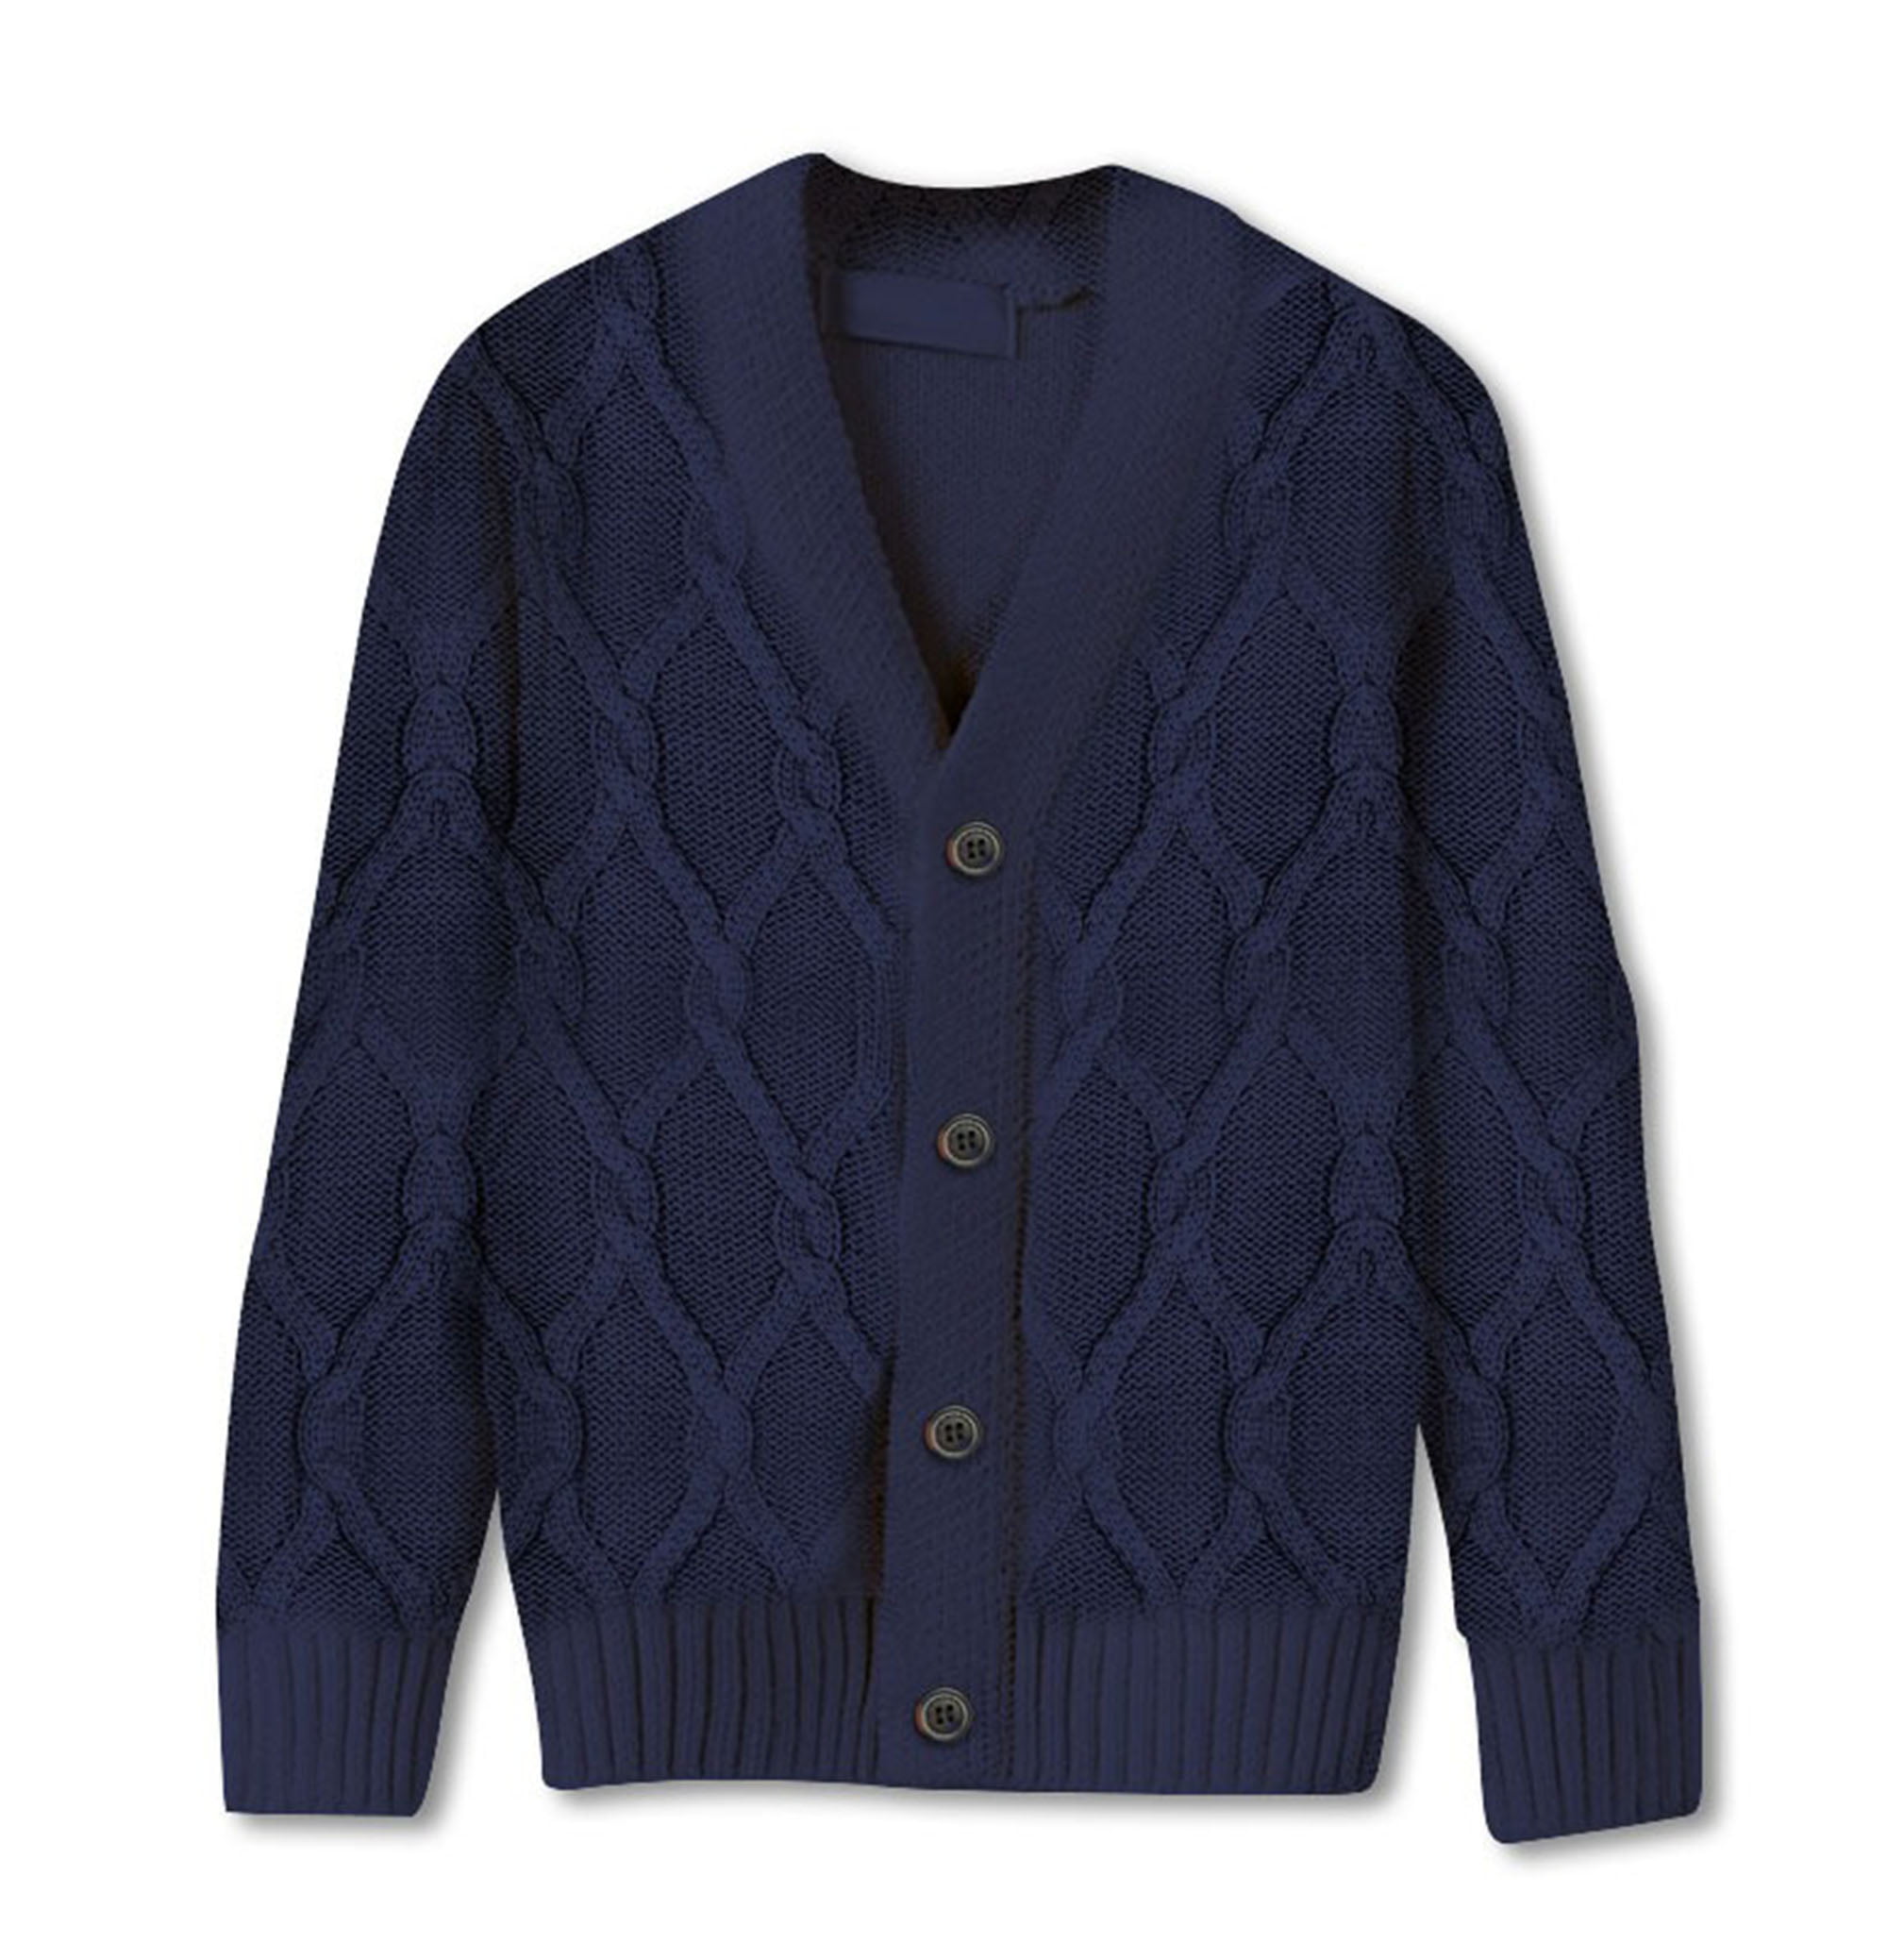 Mallimoda Boys Long Sleeve V-Neck Button Cardigan Knit Sweater Coat